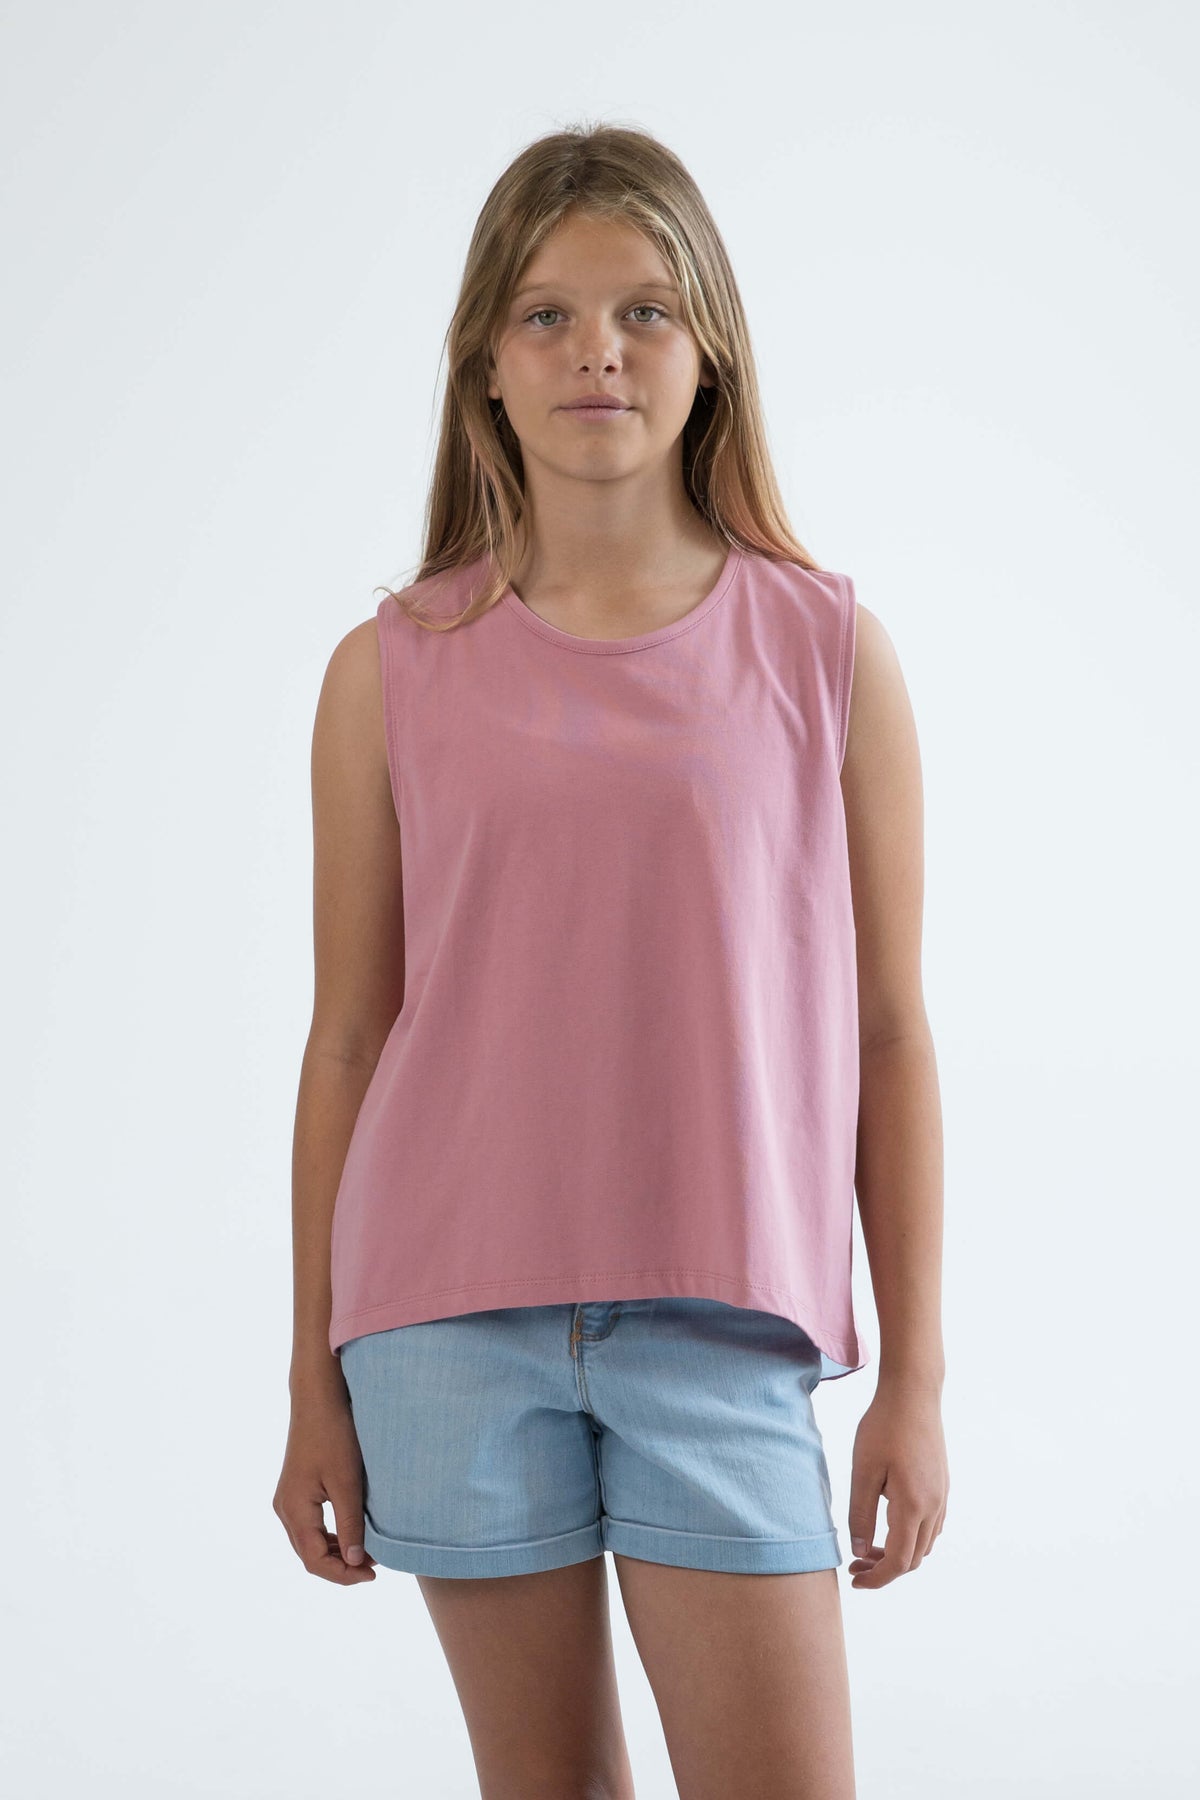 pink teen girls clothing sleeveless singlet top flamingo print by Love Haidee Australia front